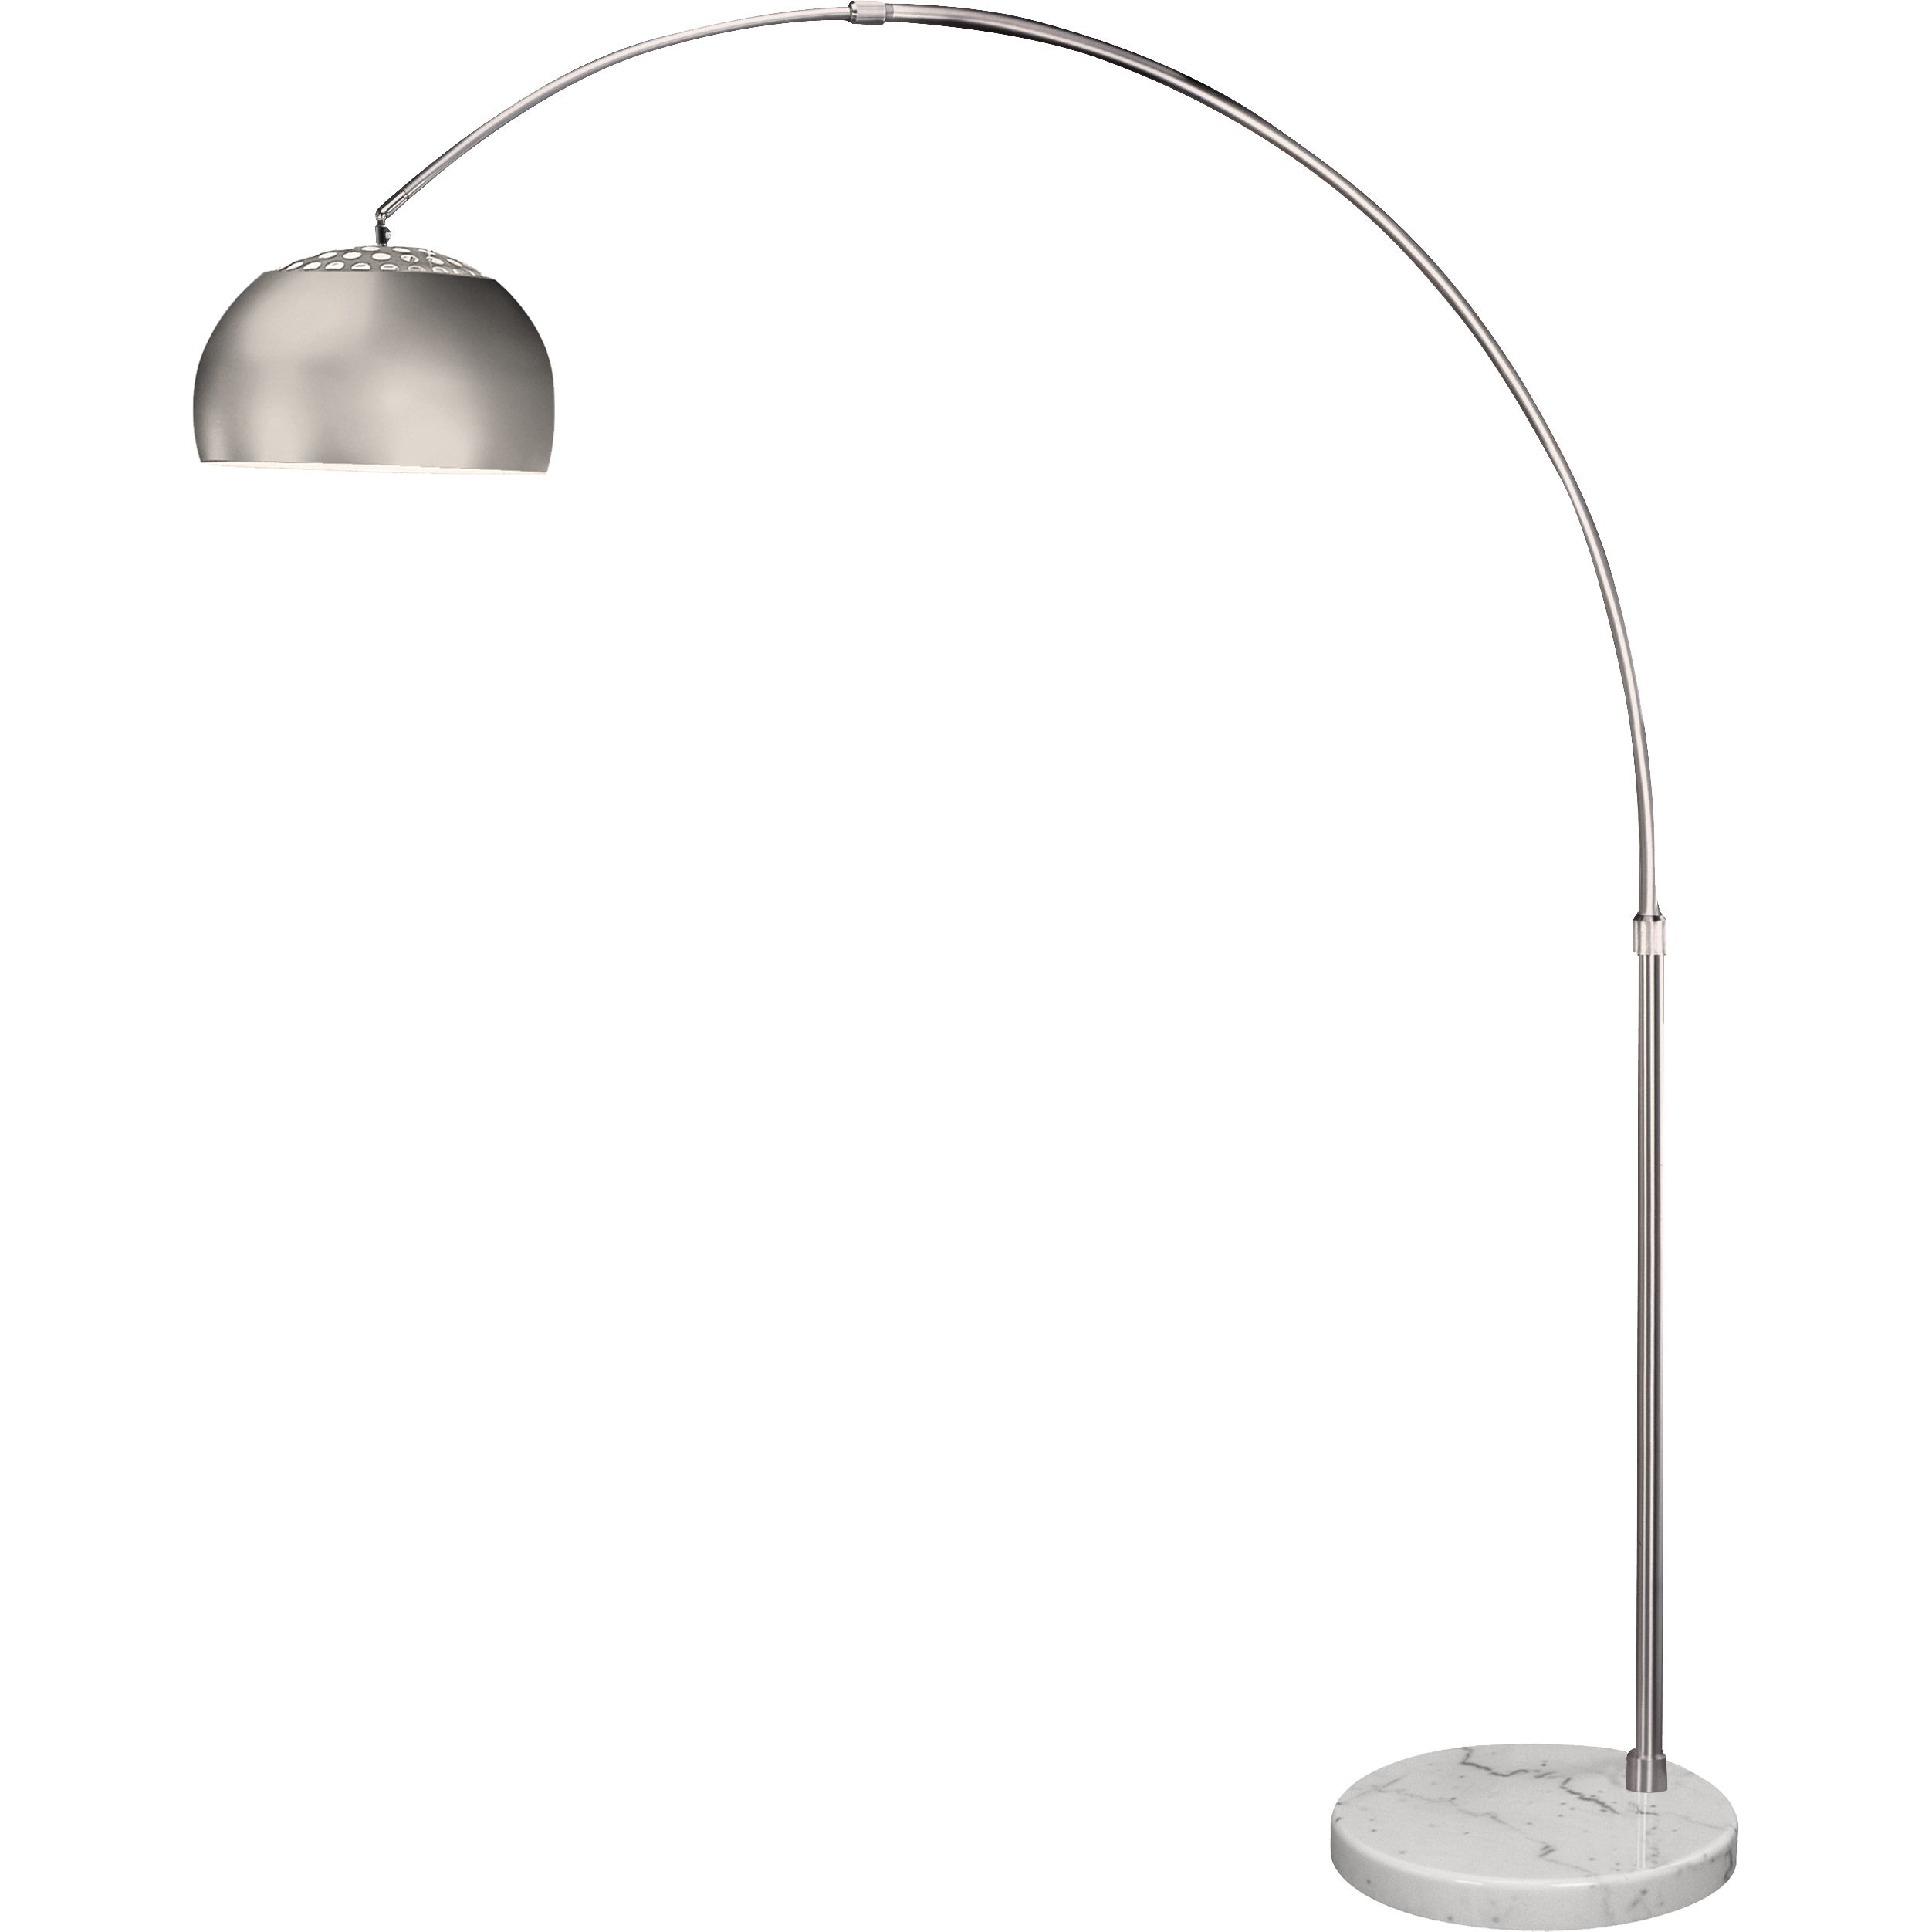 Mid 1 Light Brushed Nickel Arc Floor Lamp regarding size 2503 X 2503